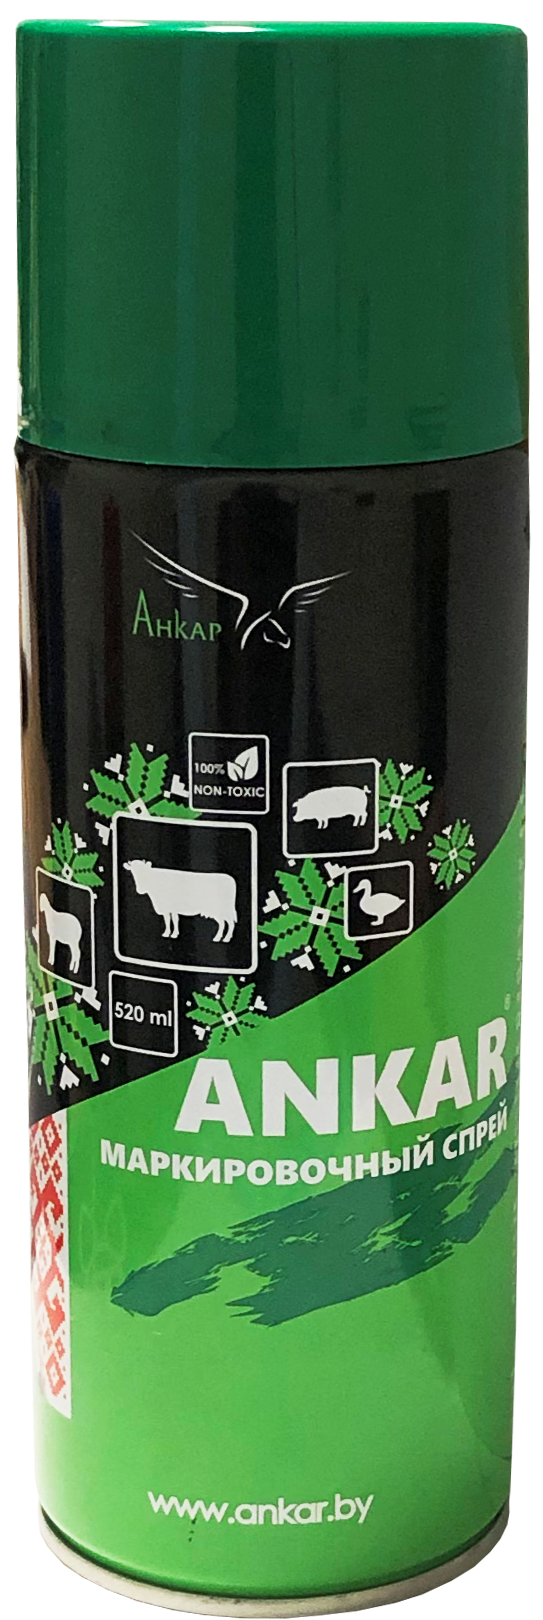 Краска-аэрозоль ANKAR для маркировки животных, цвет зеленый 520 мл.